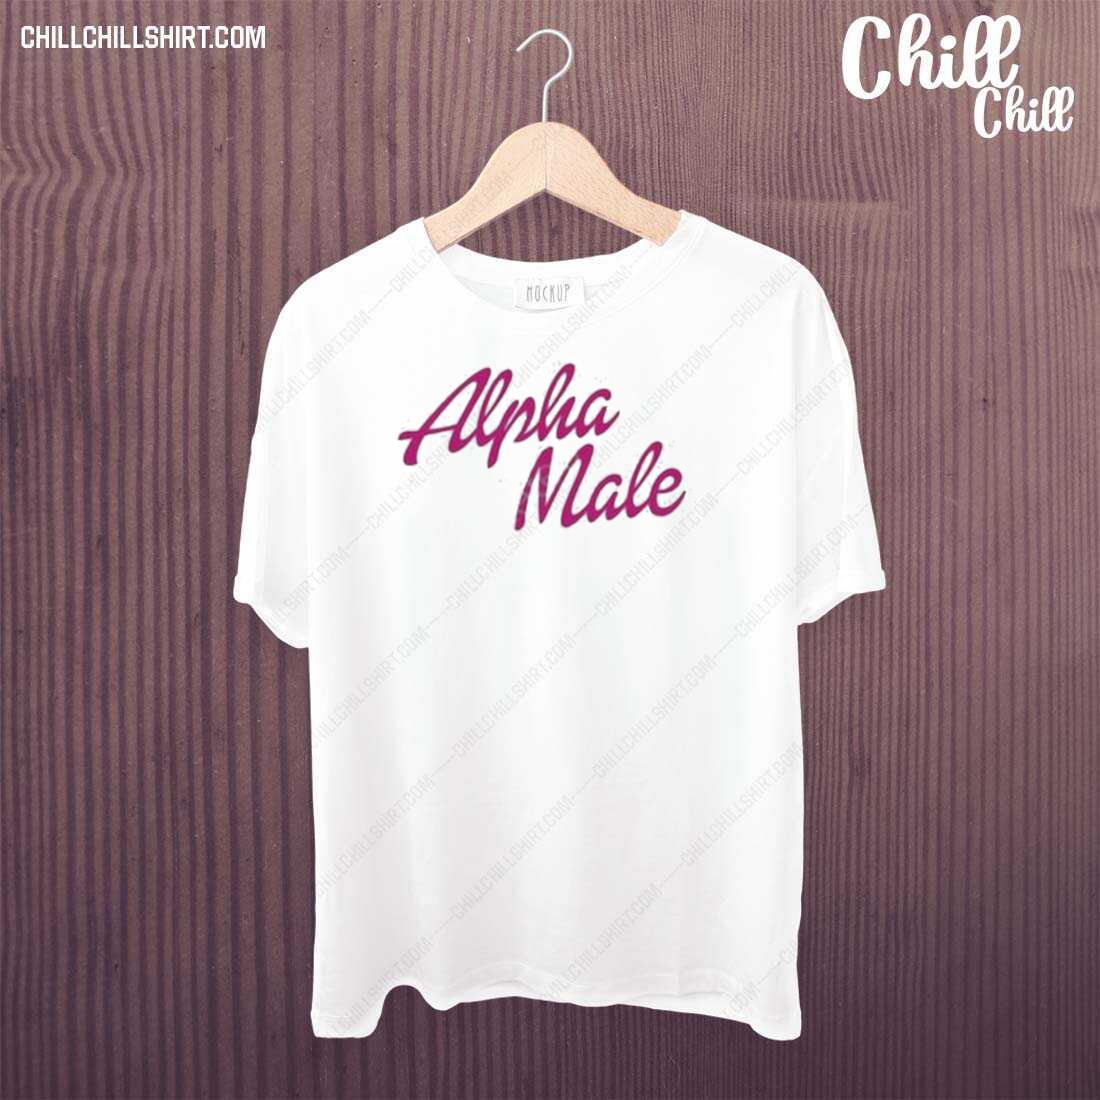 Nice bryson Alpha Male T-shirt